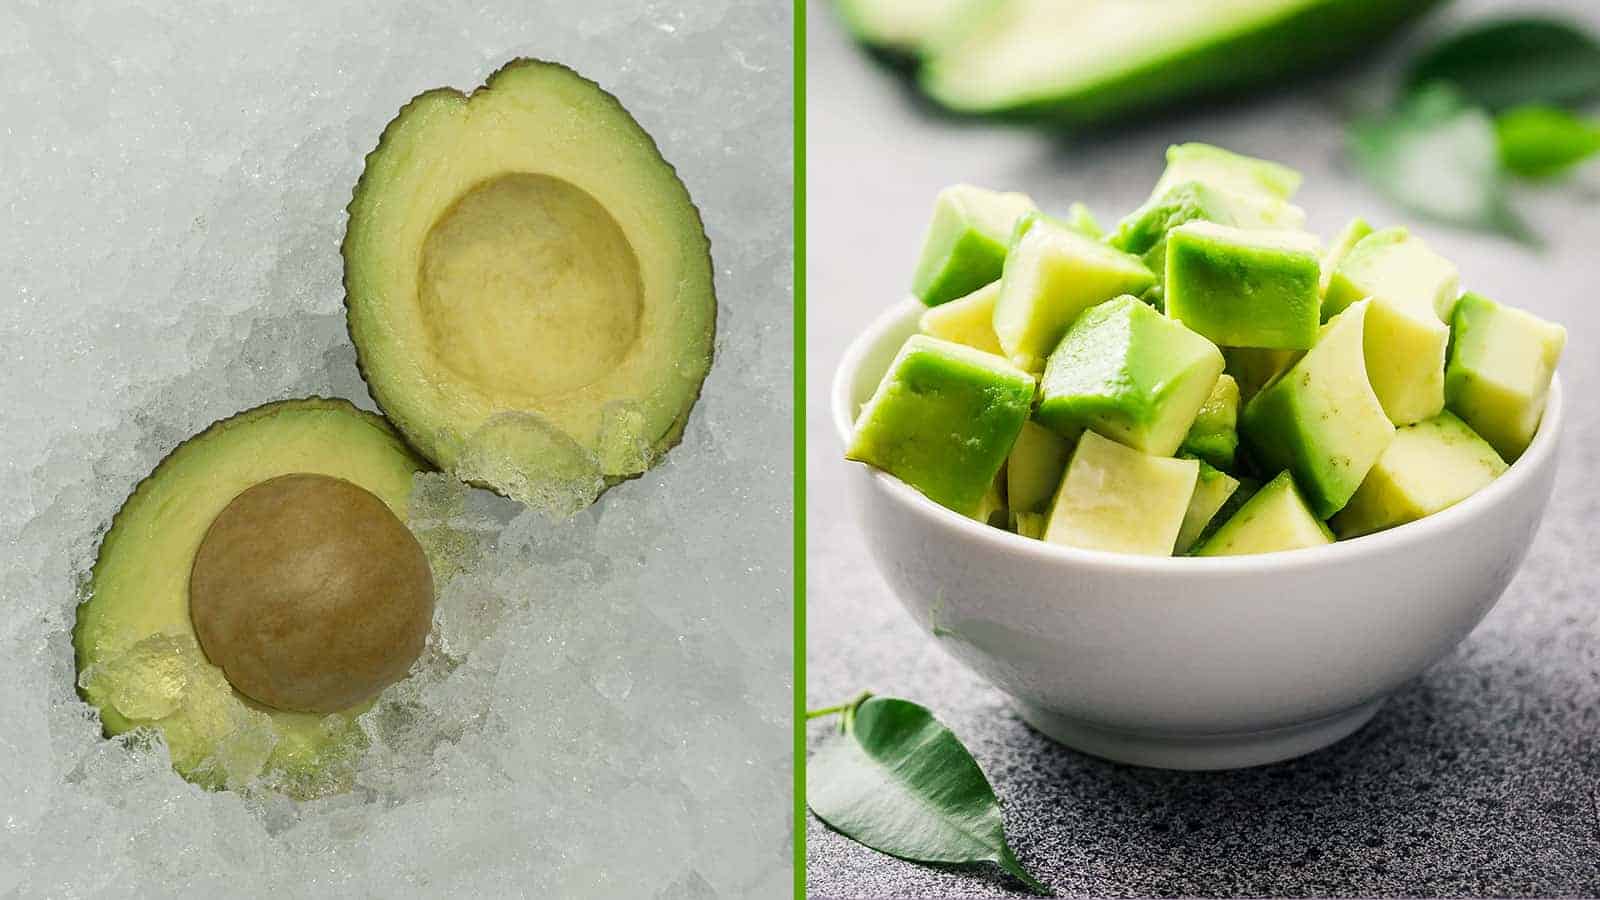 Nutritionist Explains Why You Should Freeze Avocado